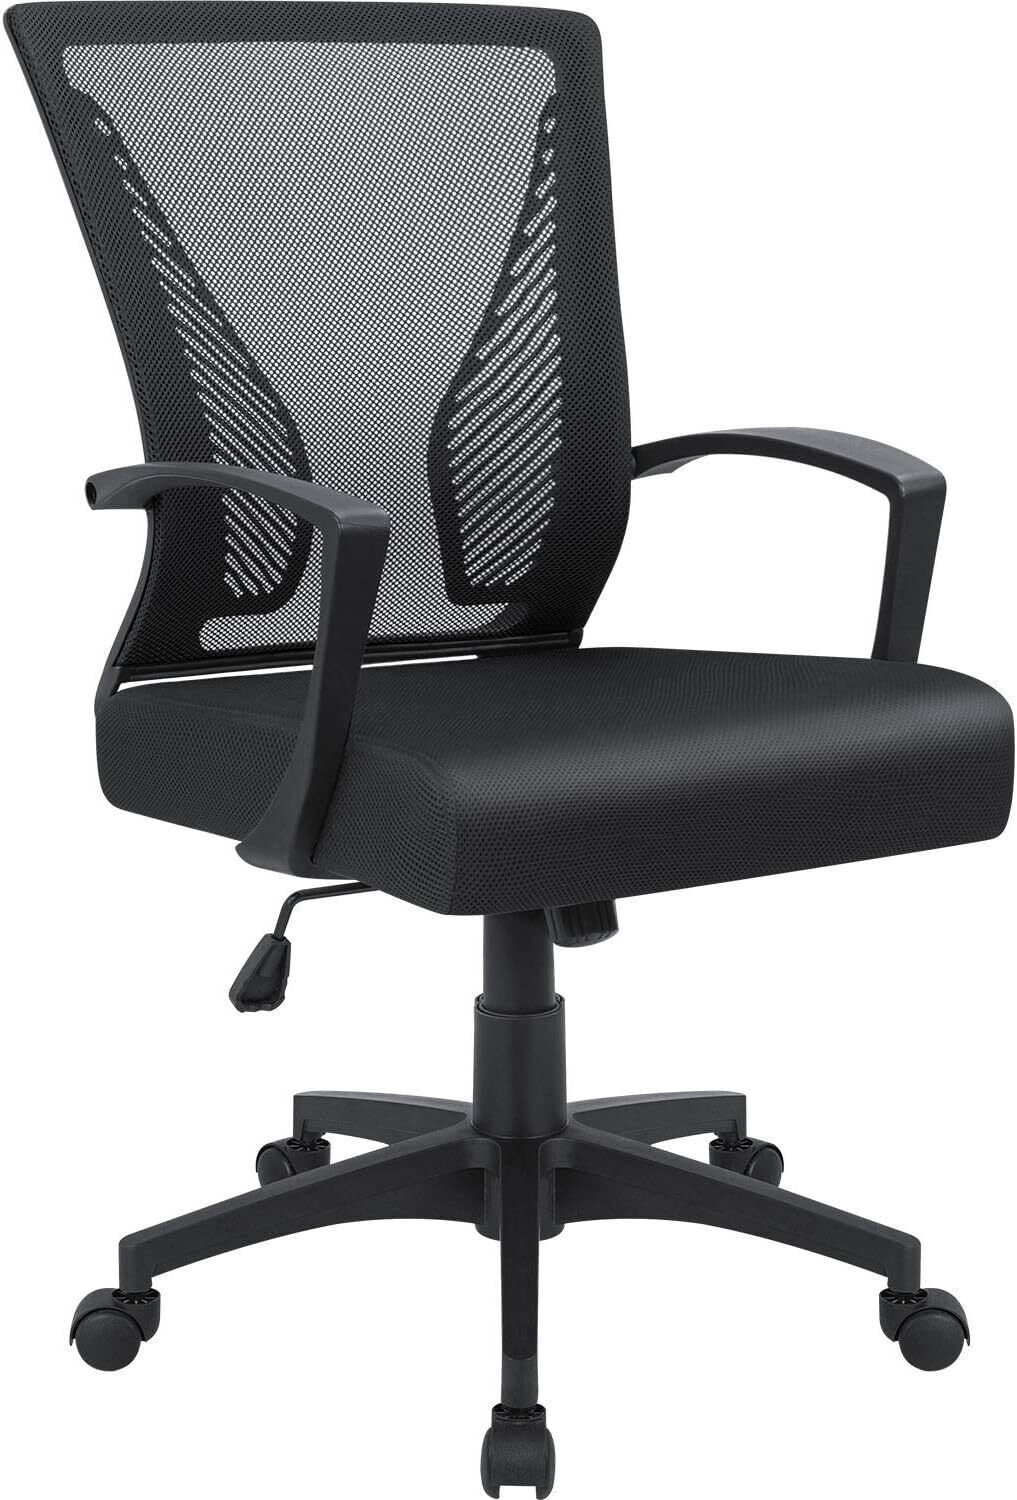 Furmax Office Chair Mid Back Swivel Lumbar Support Desk Chair,  (Black)